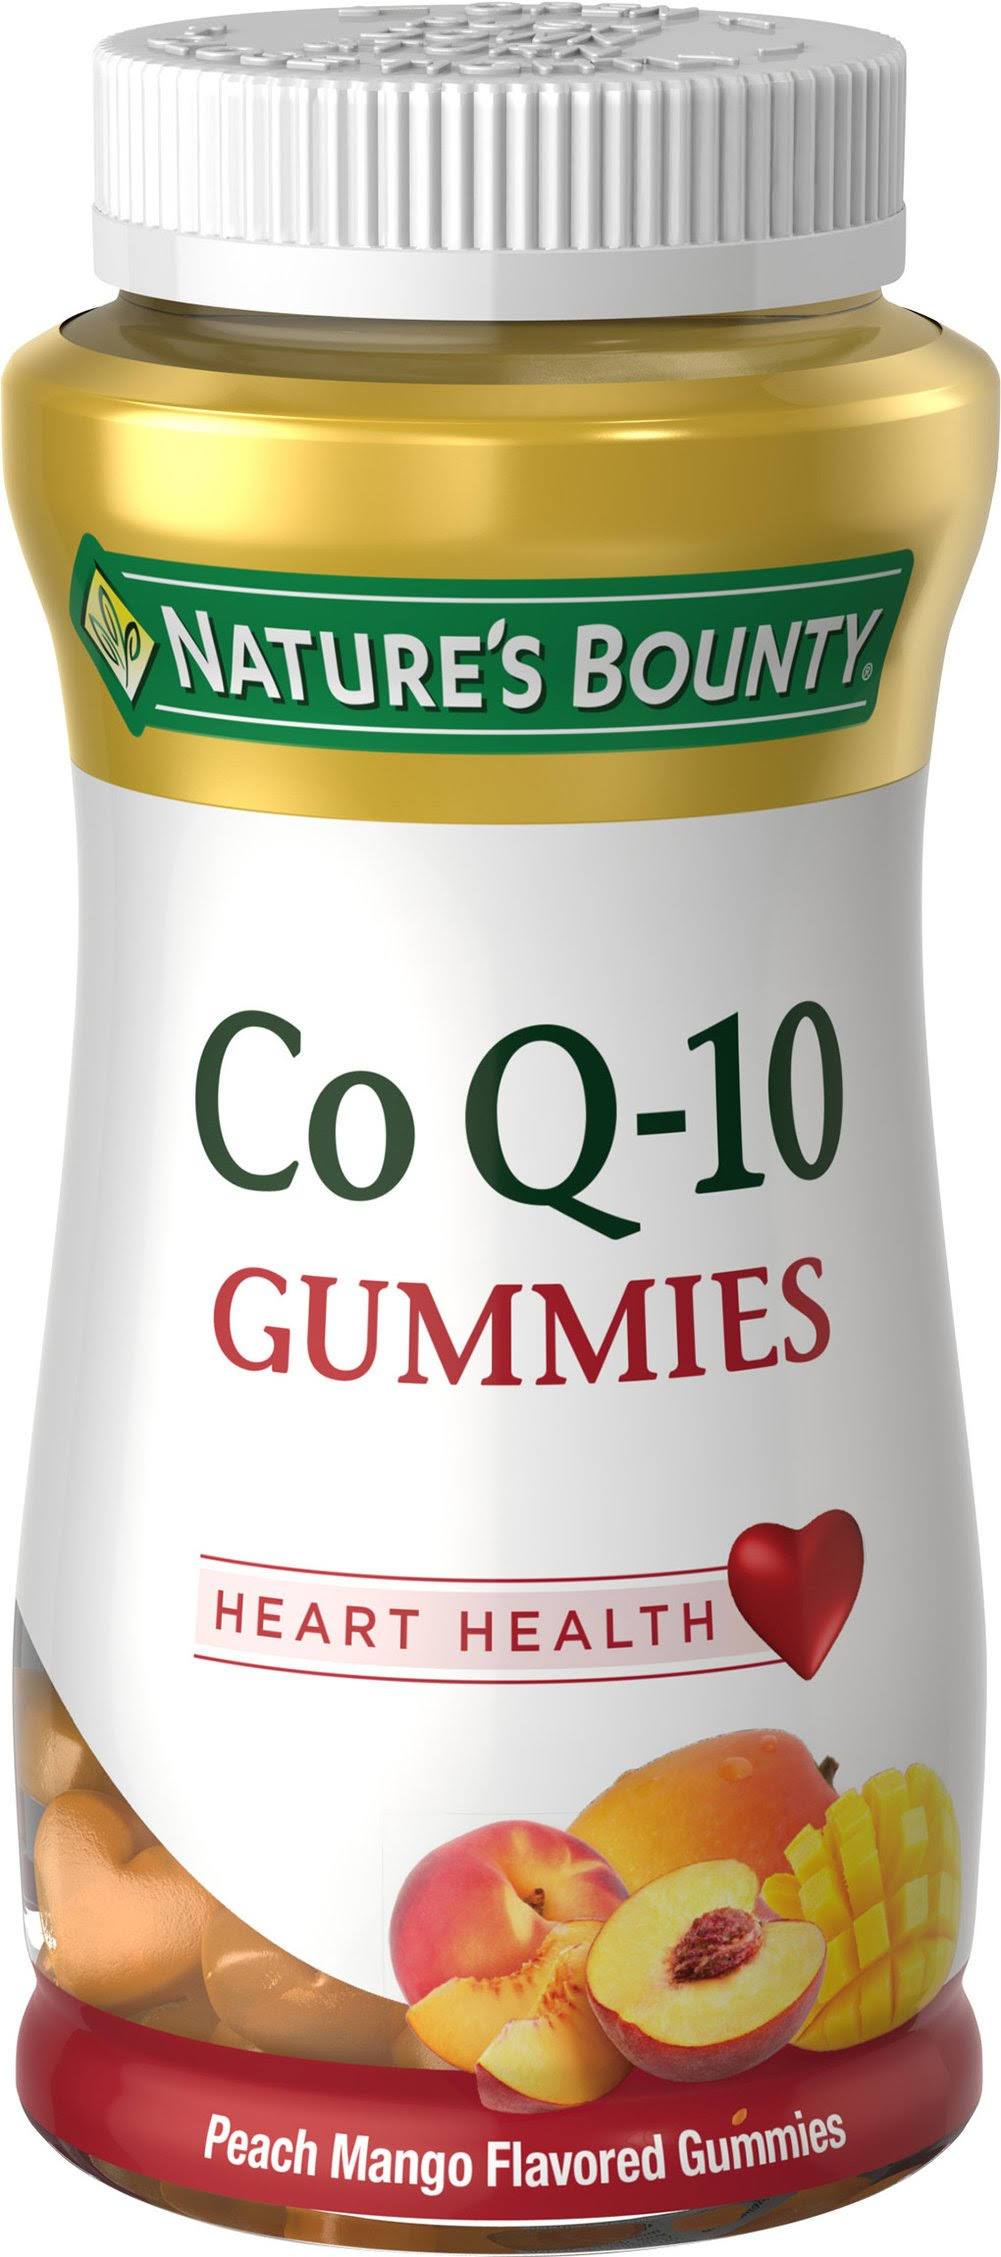 Nature's Bounty Co Q-10 Dietary Supplement Gummies - Peach Mango, 200mg, 60ct